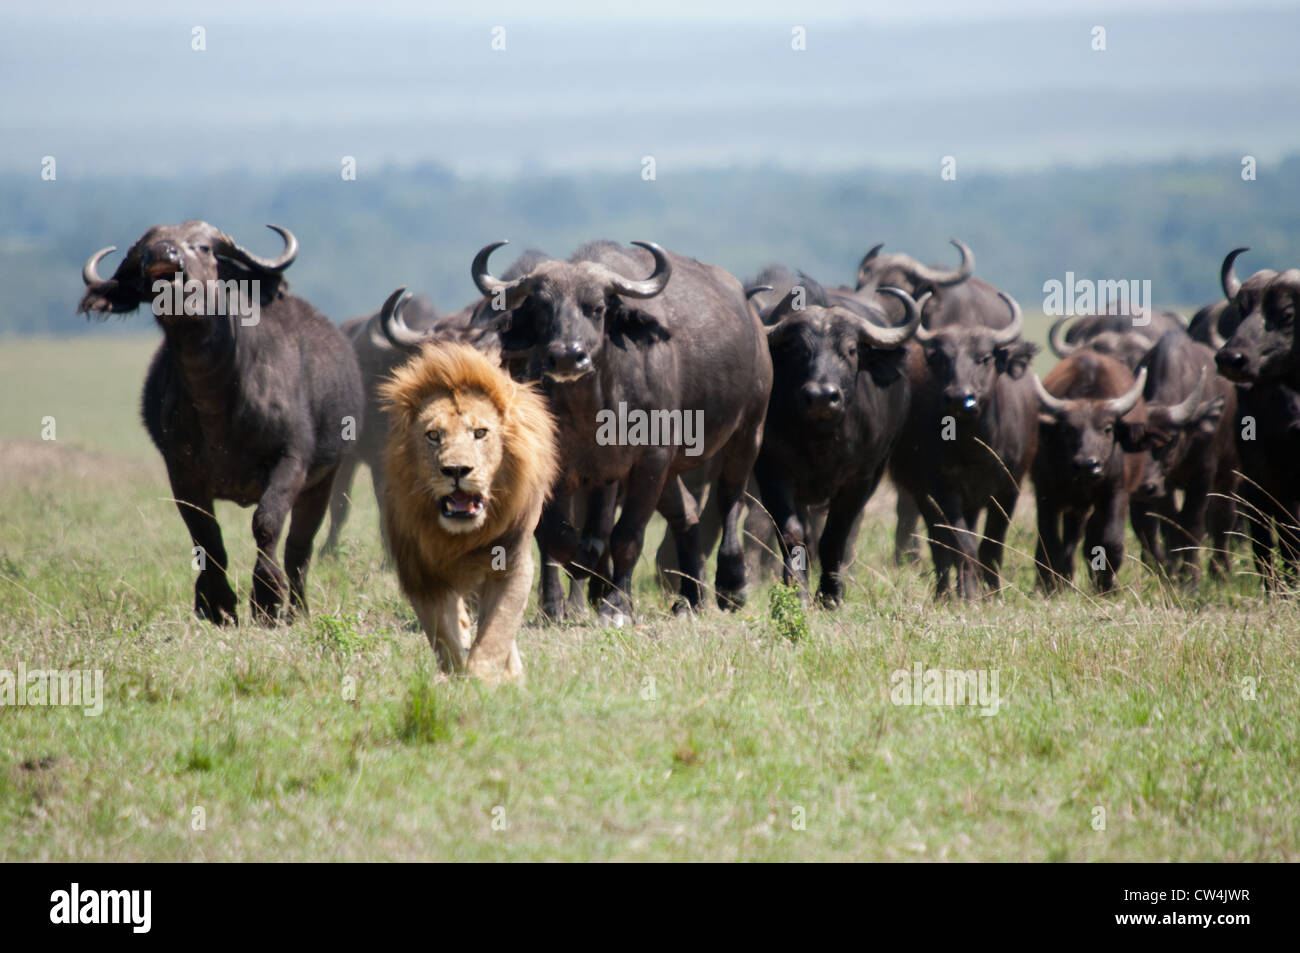 Lions attacking buffalo Stock Photo